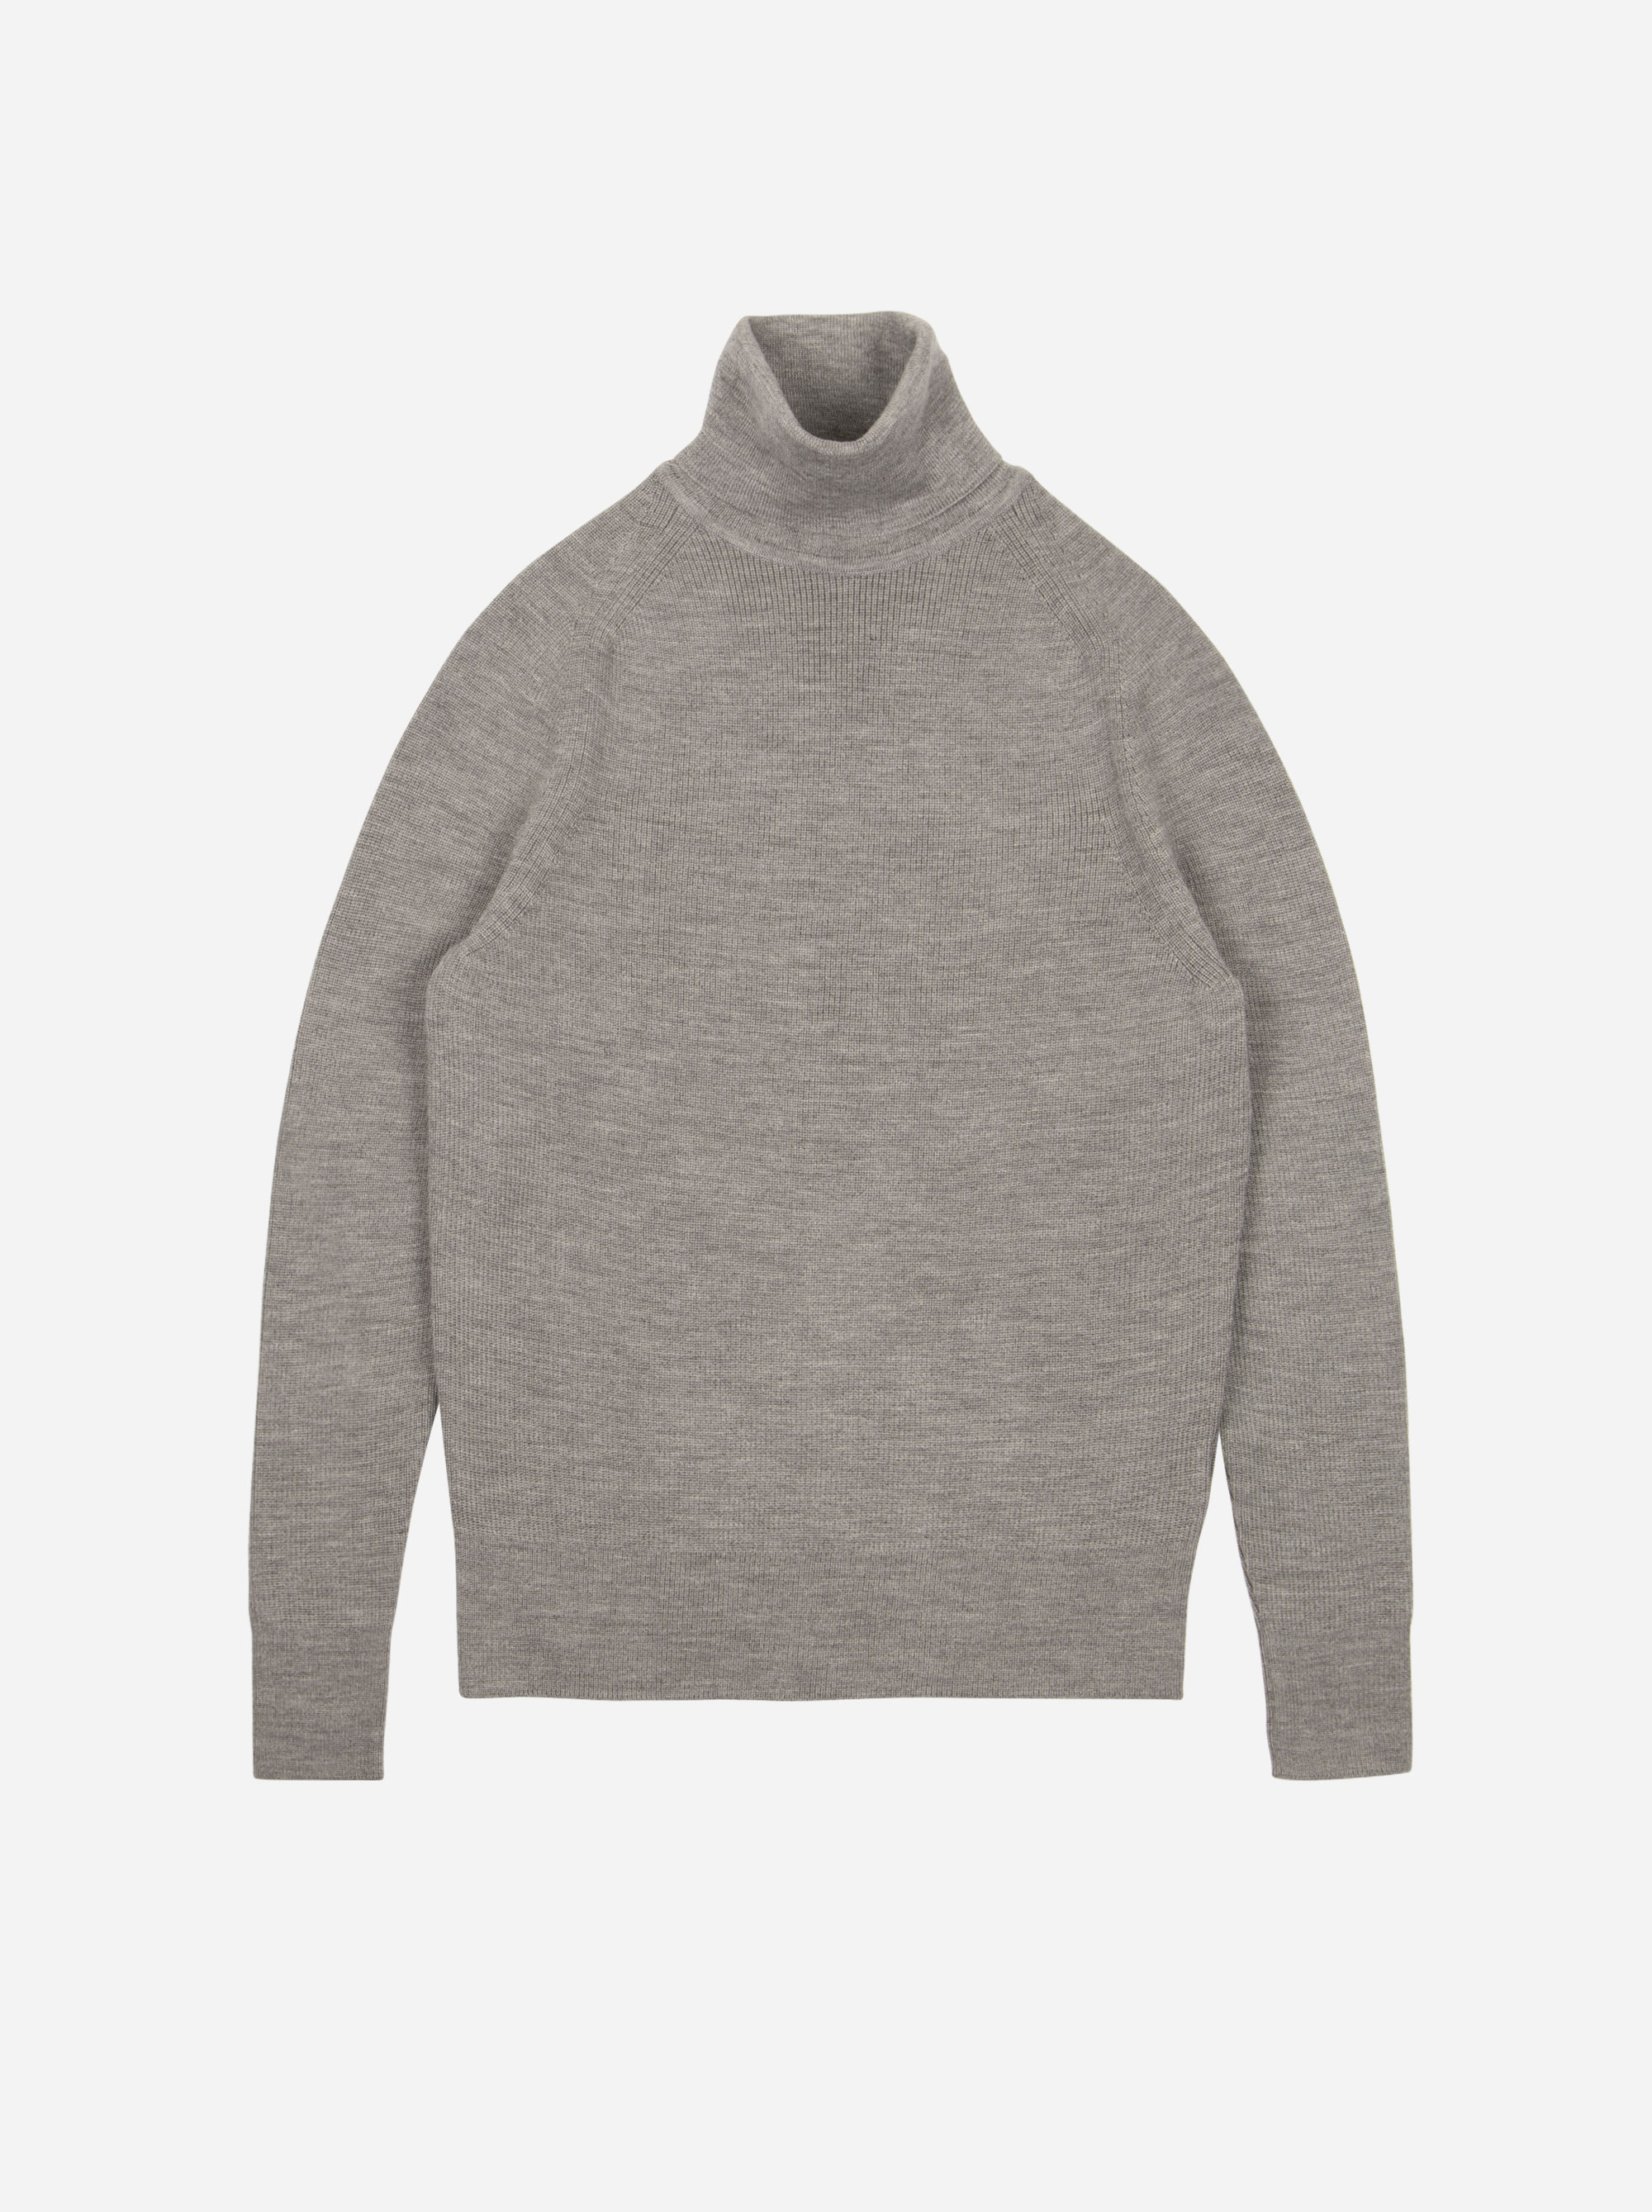 Teym - Turtleneck - The Merino Sweater - Women - Grey - 5